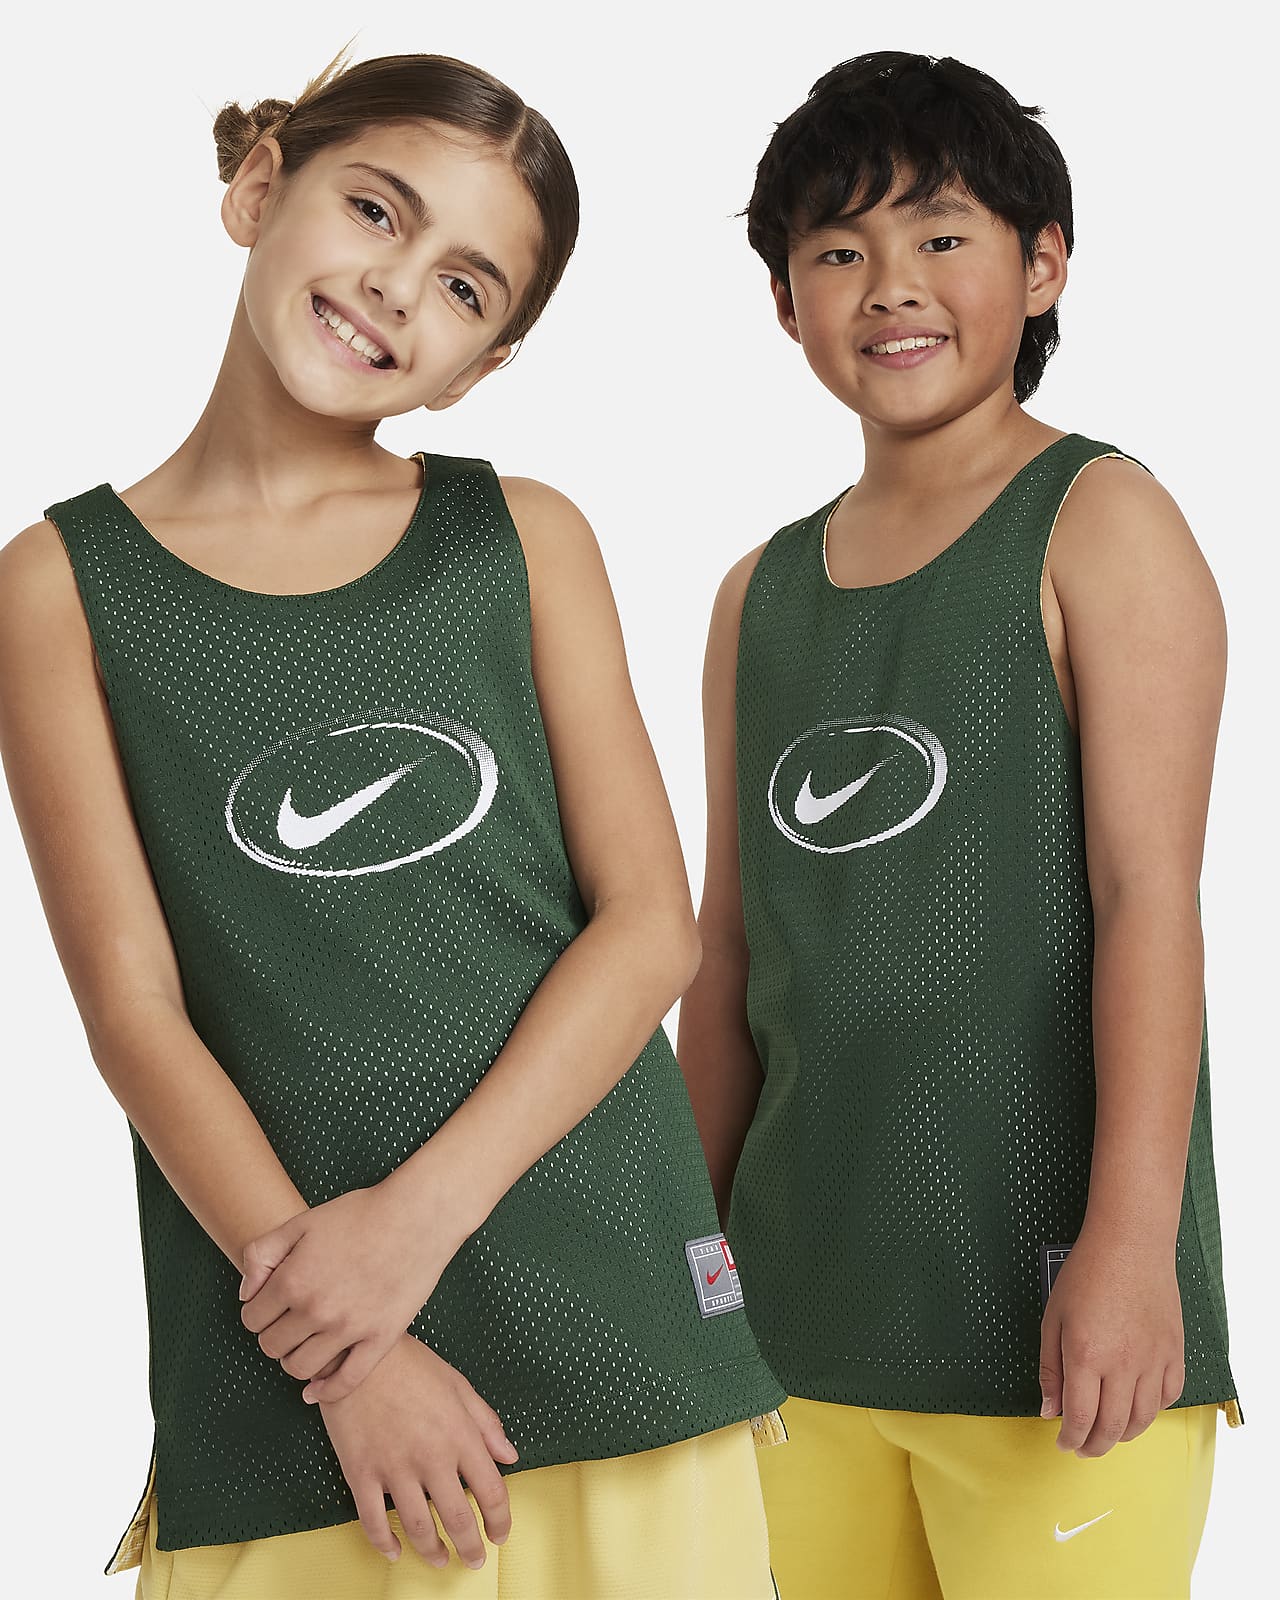 Nike Culture of Basketball 大童雙面球衣